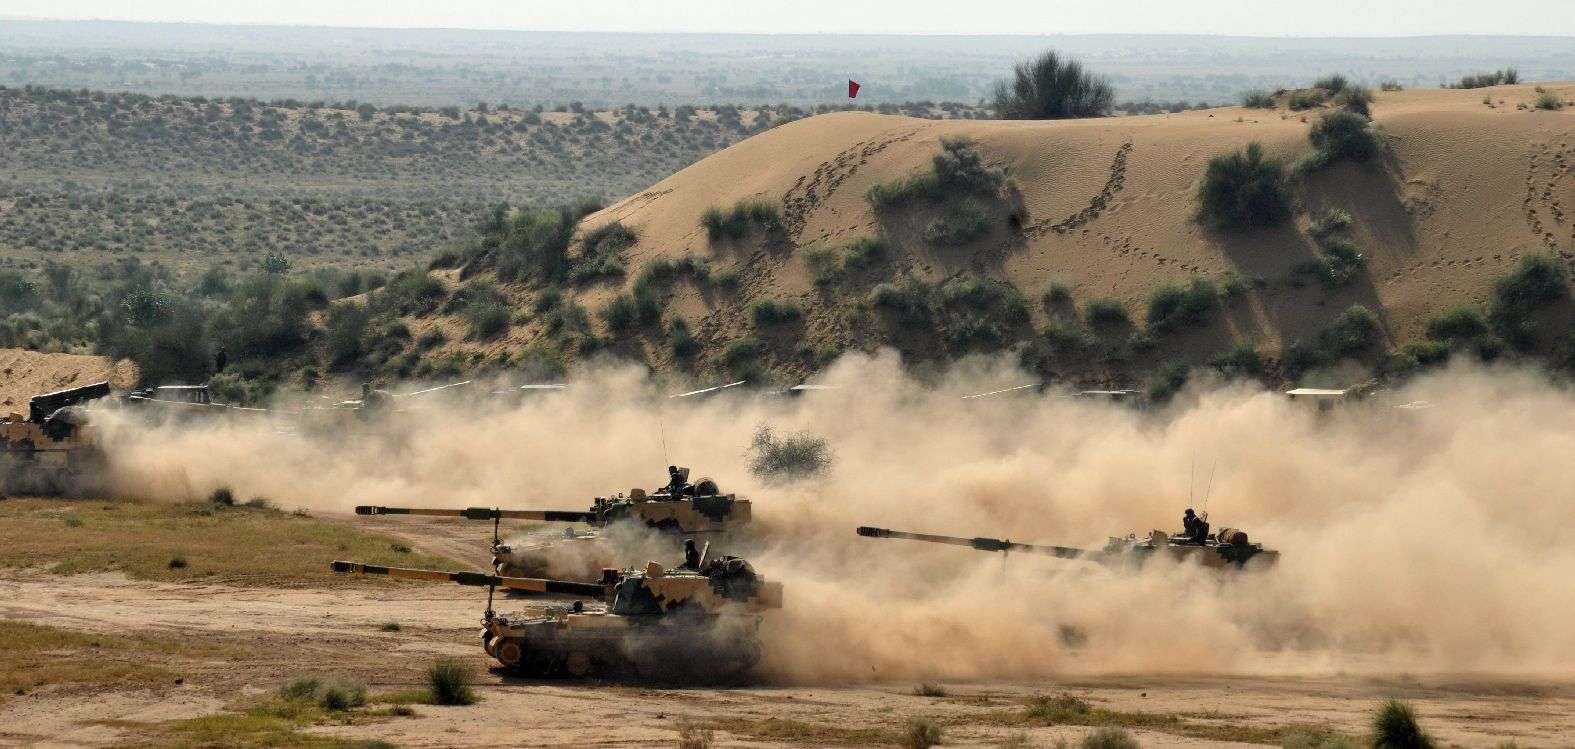 Army's Maneuvers in pokhran field firing range in jaisalmer